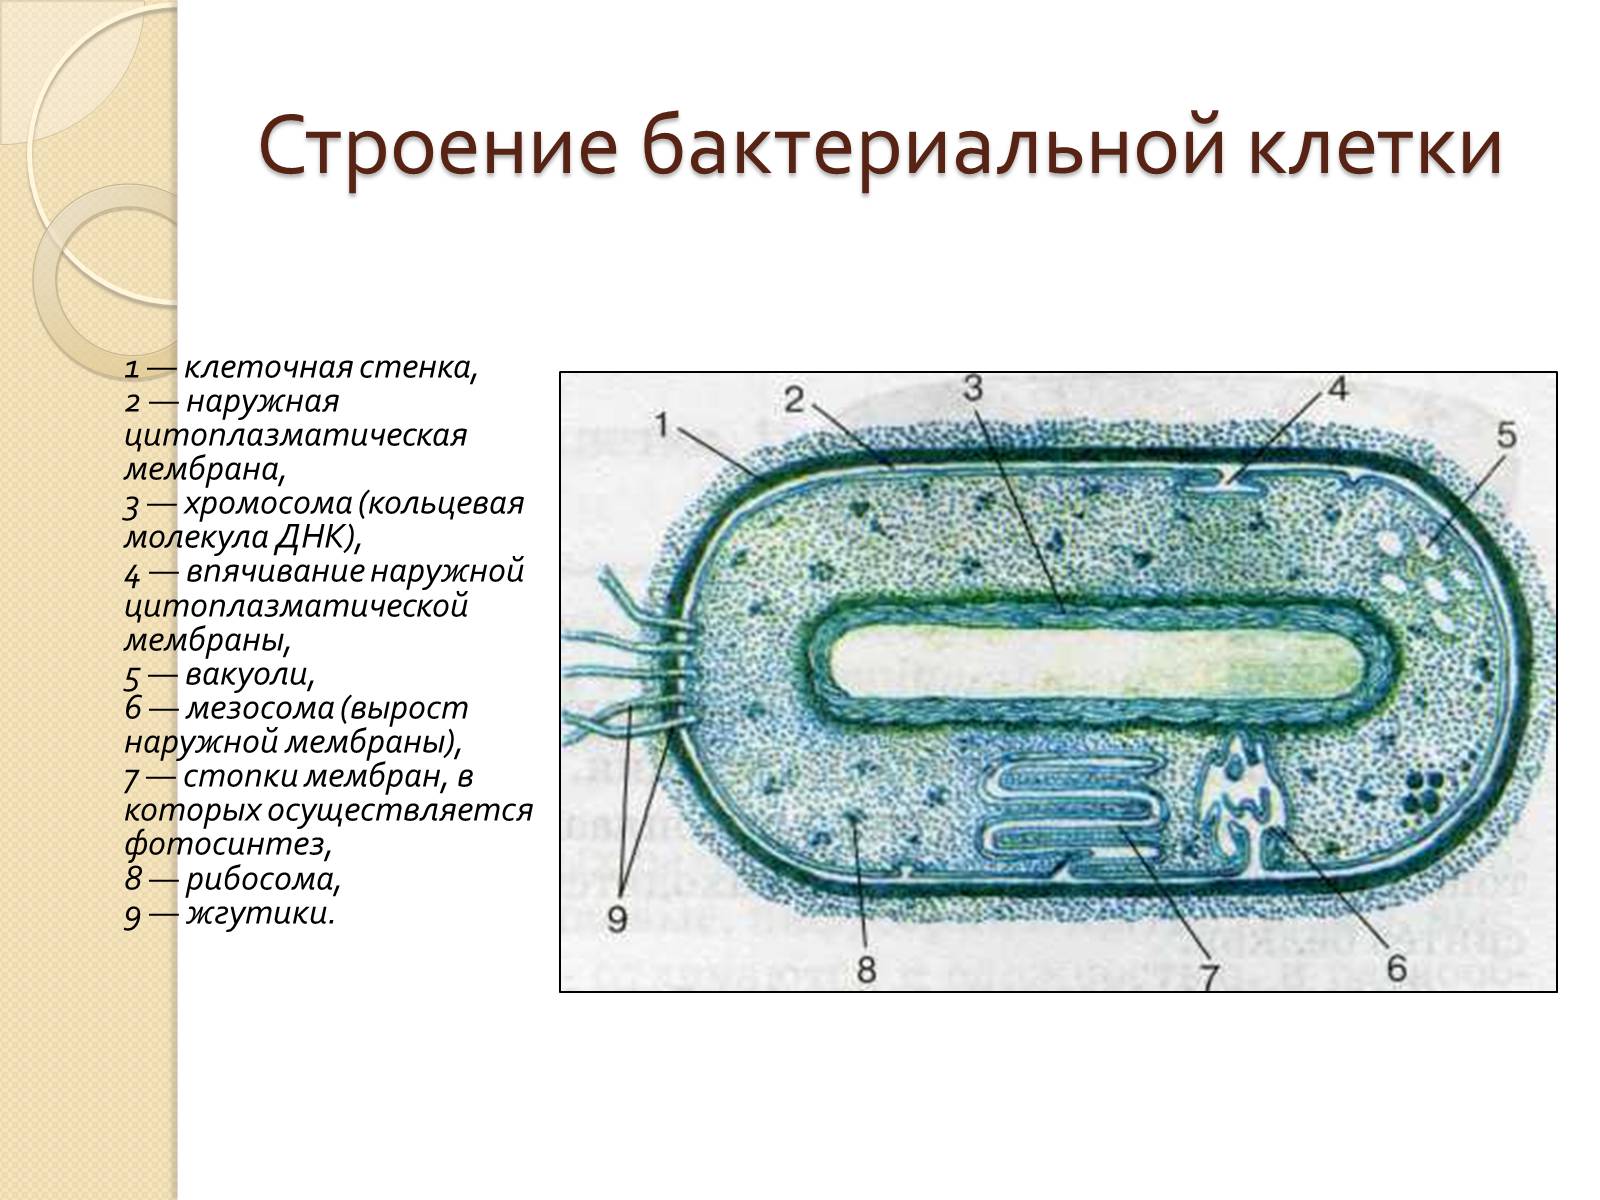 Структура клетки прокариот. Строение прокариотической клетки бактерии. Строение прокариотической бактериальной клетки. Структура строения прокариотической клетки. Строение бактериальной клетки прокариот.